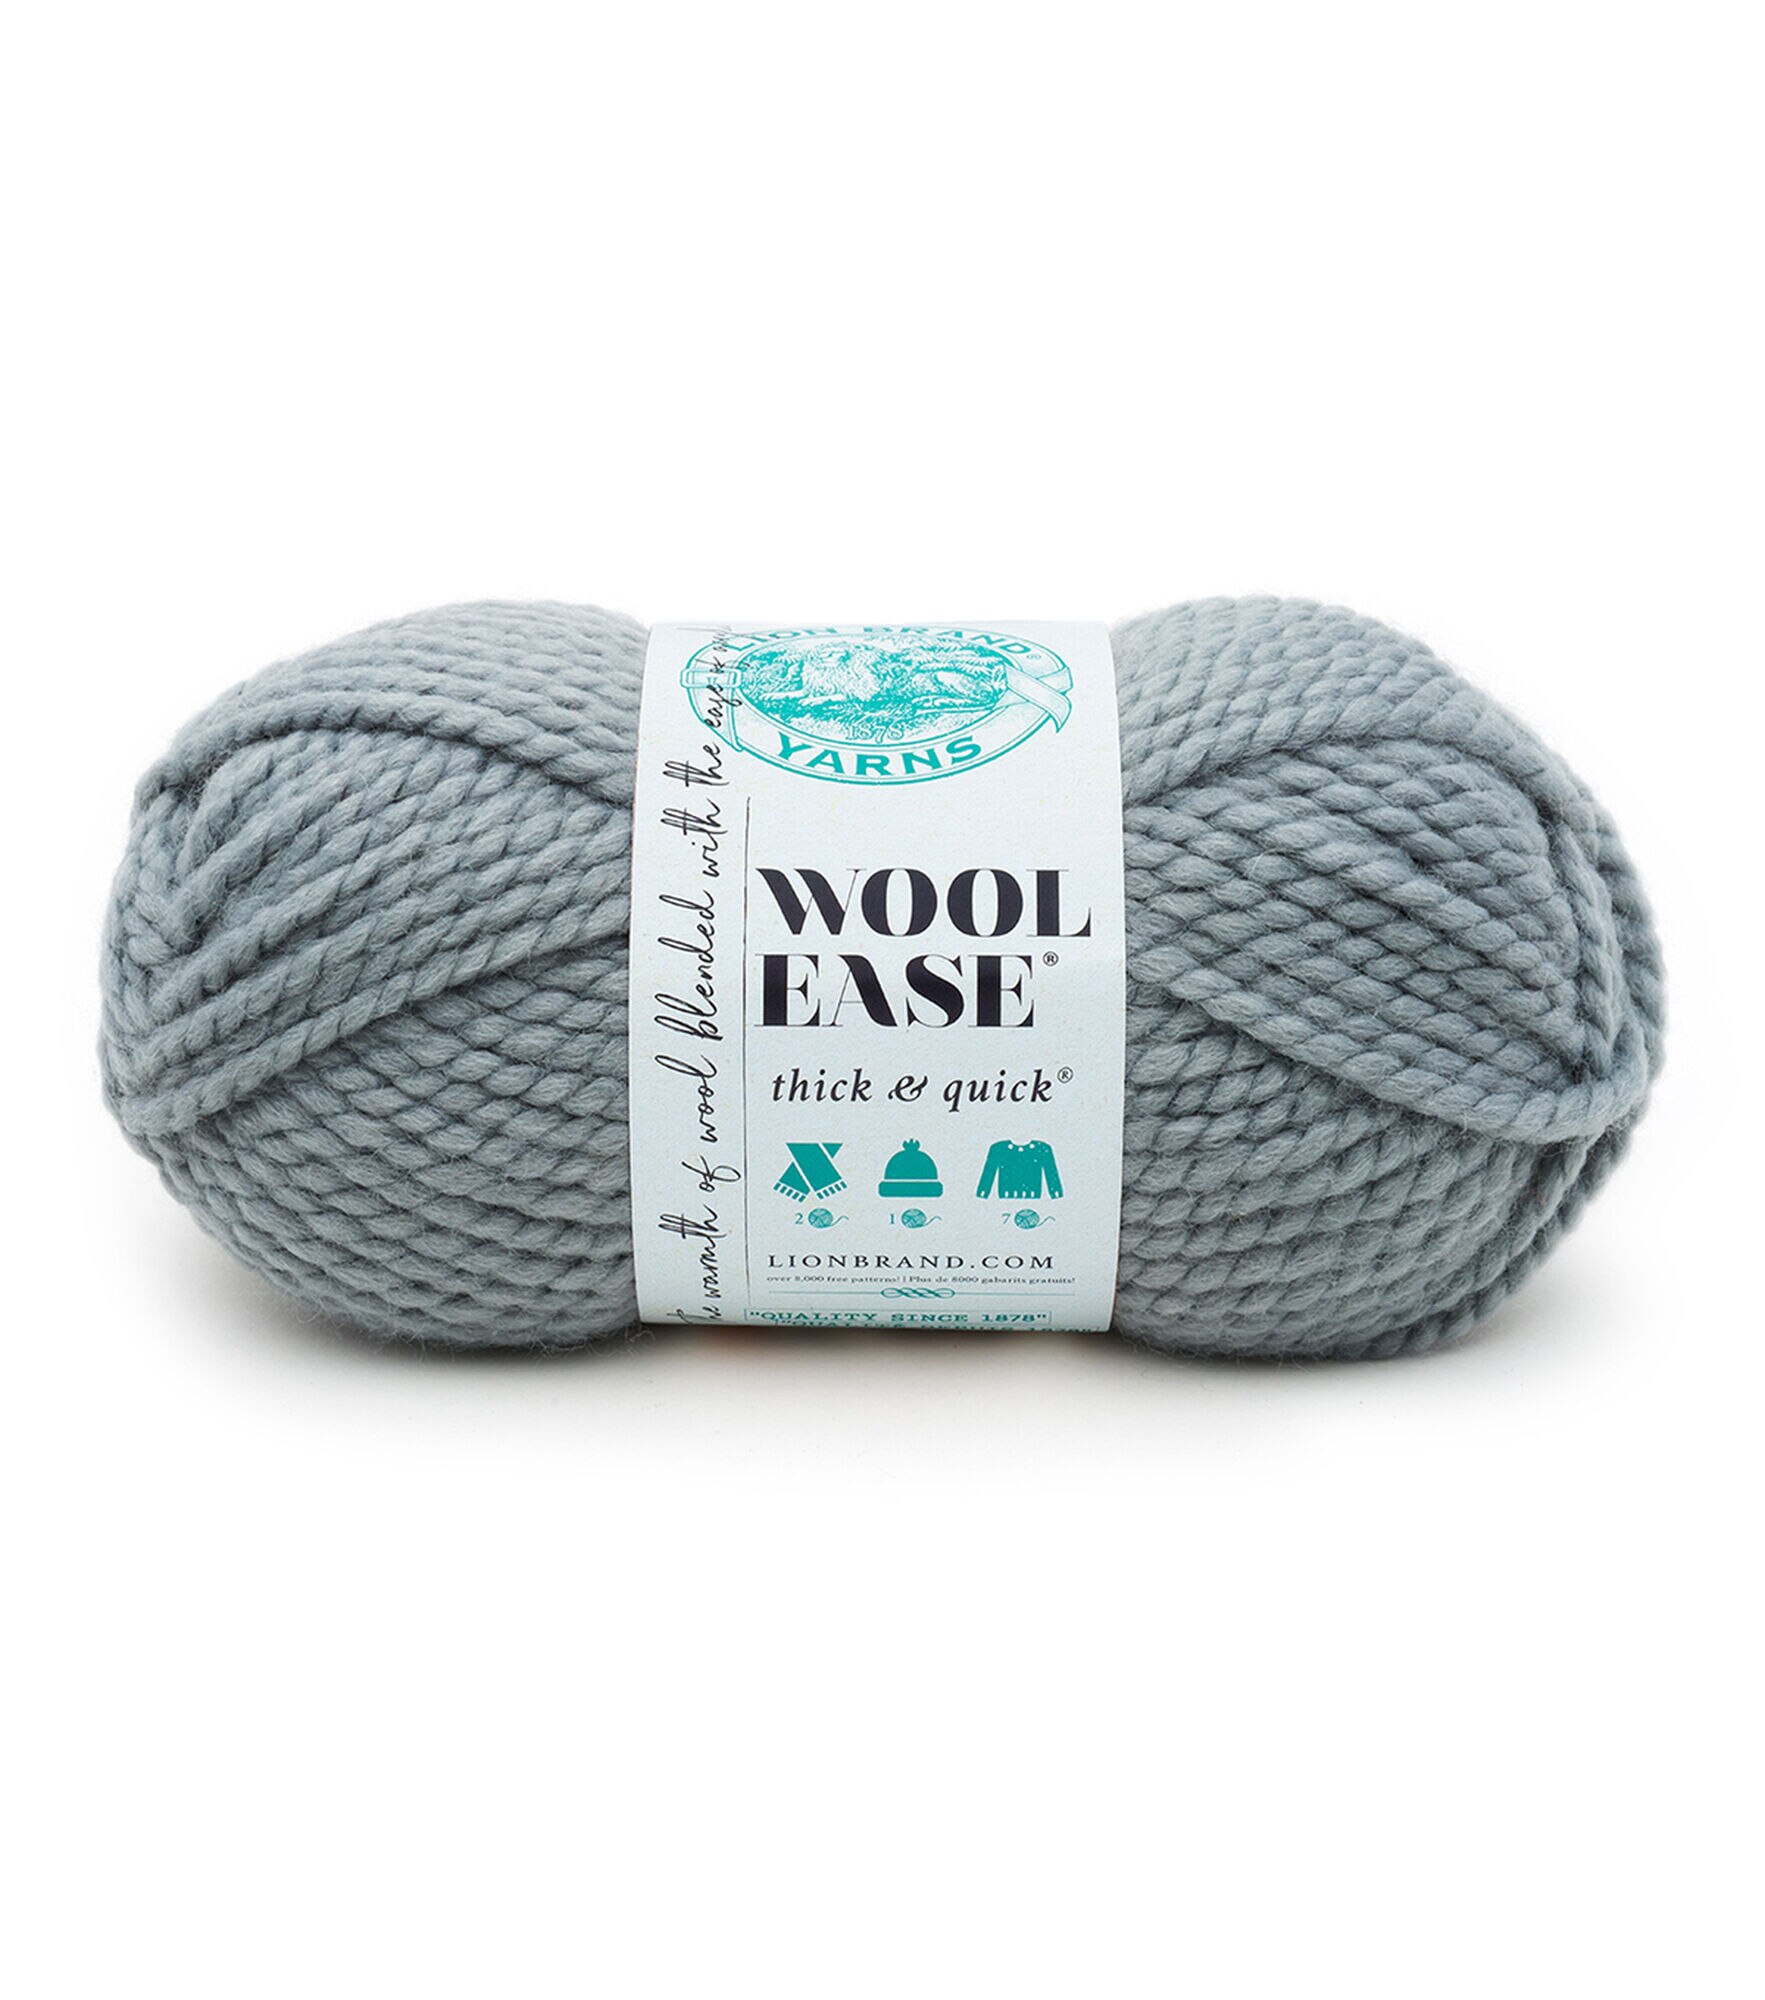  (1 Skein) Wool-Ease Yarn, Wheat